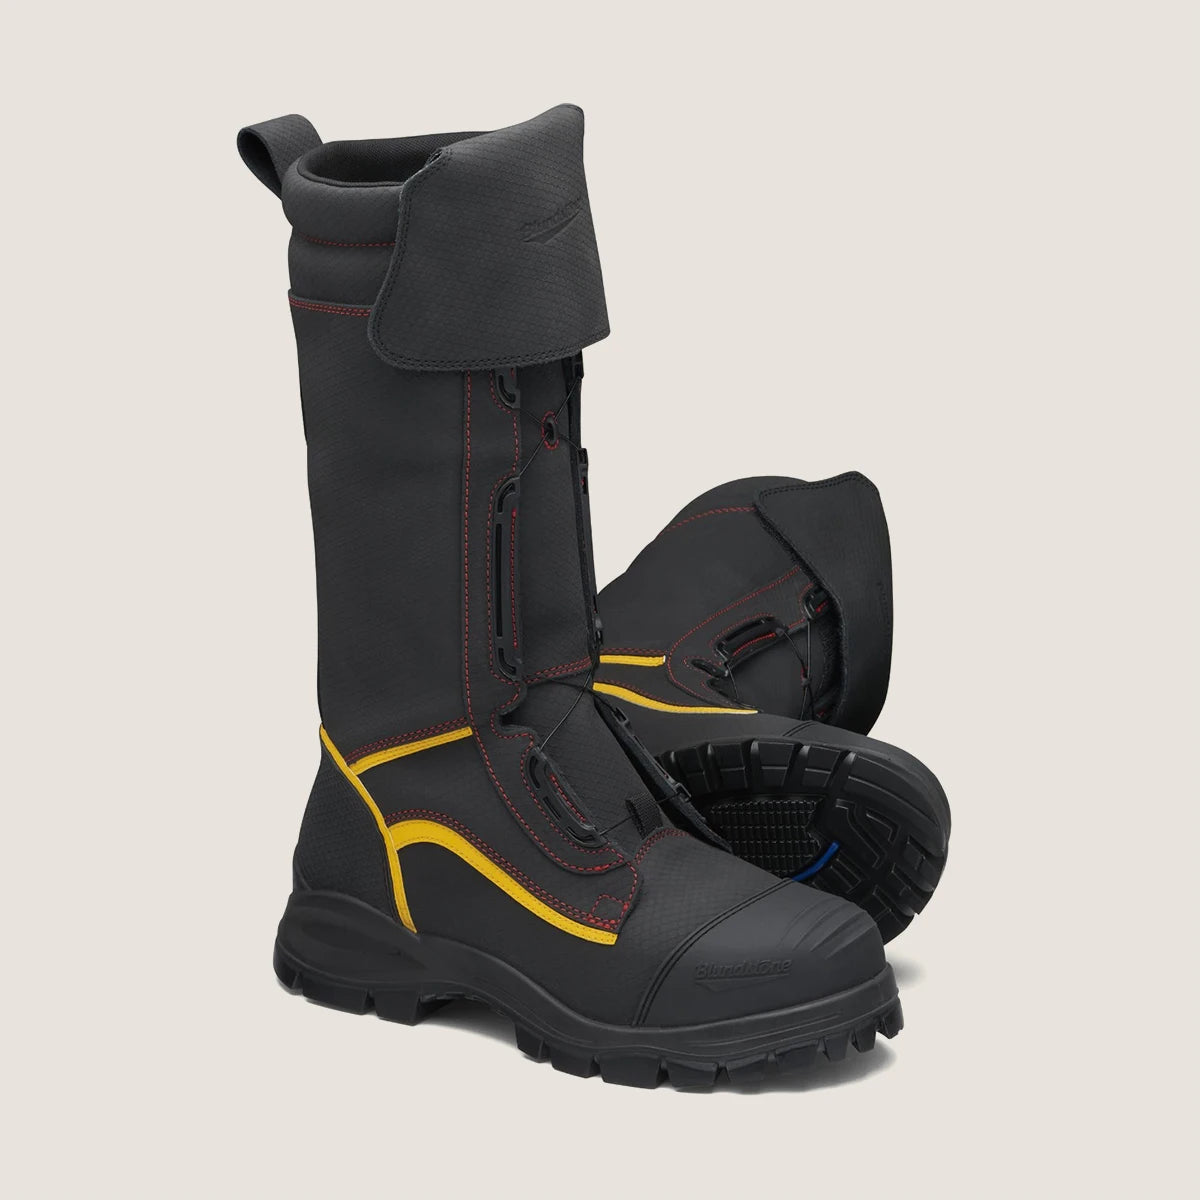 Blundstone 980 Extreme BOA Mining Safety Boot-Black